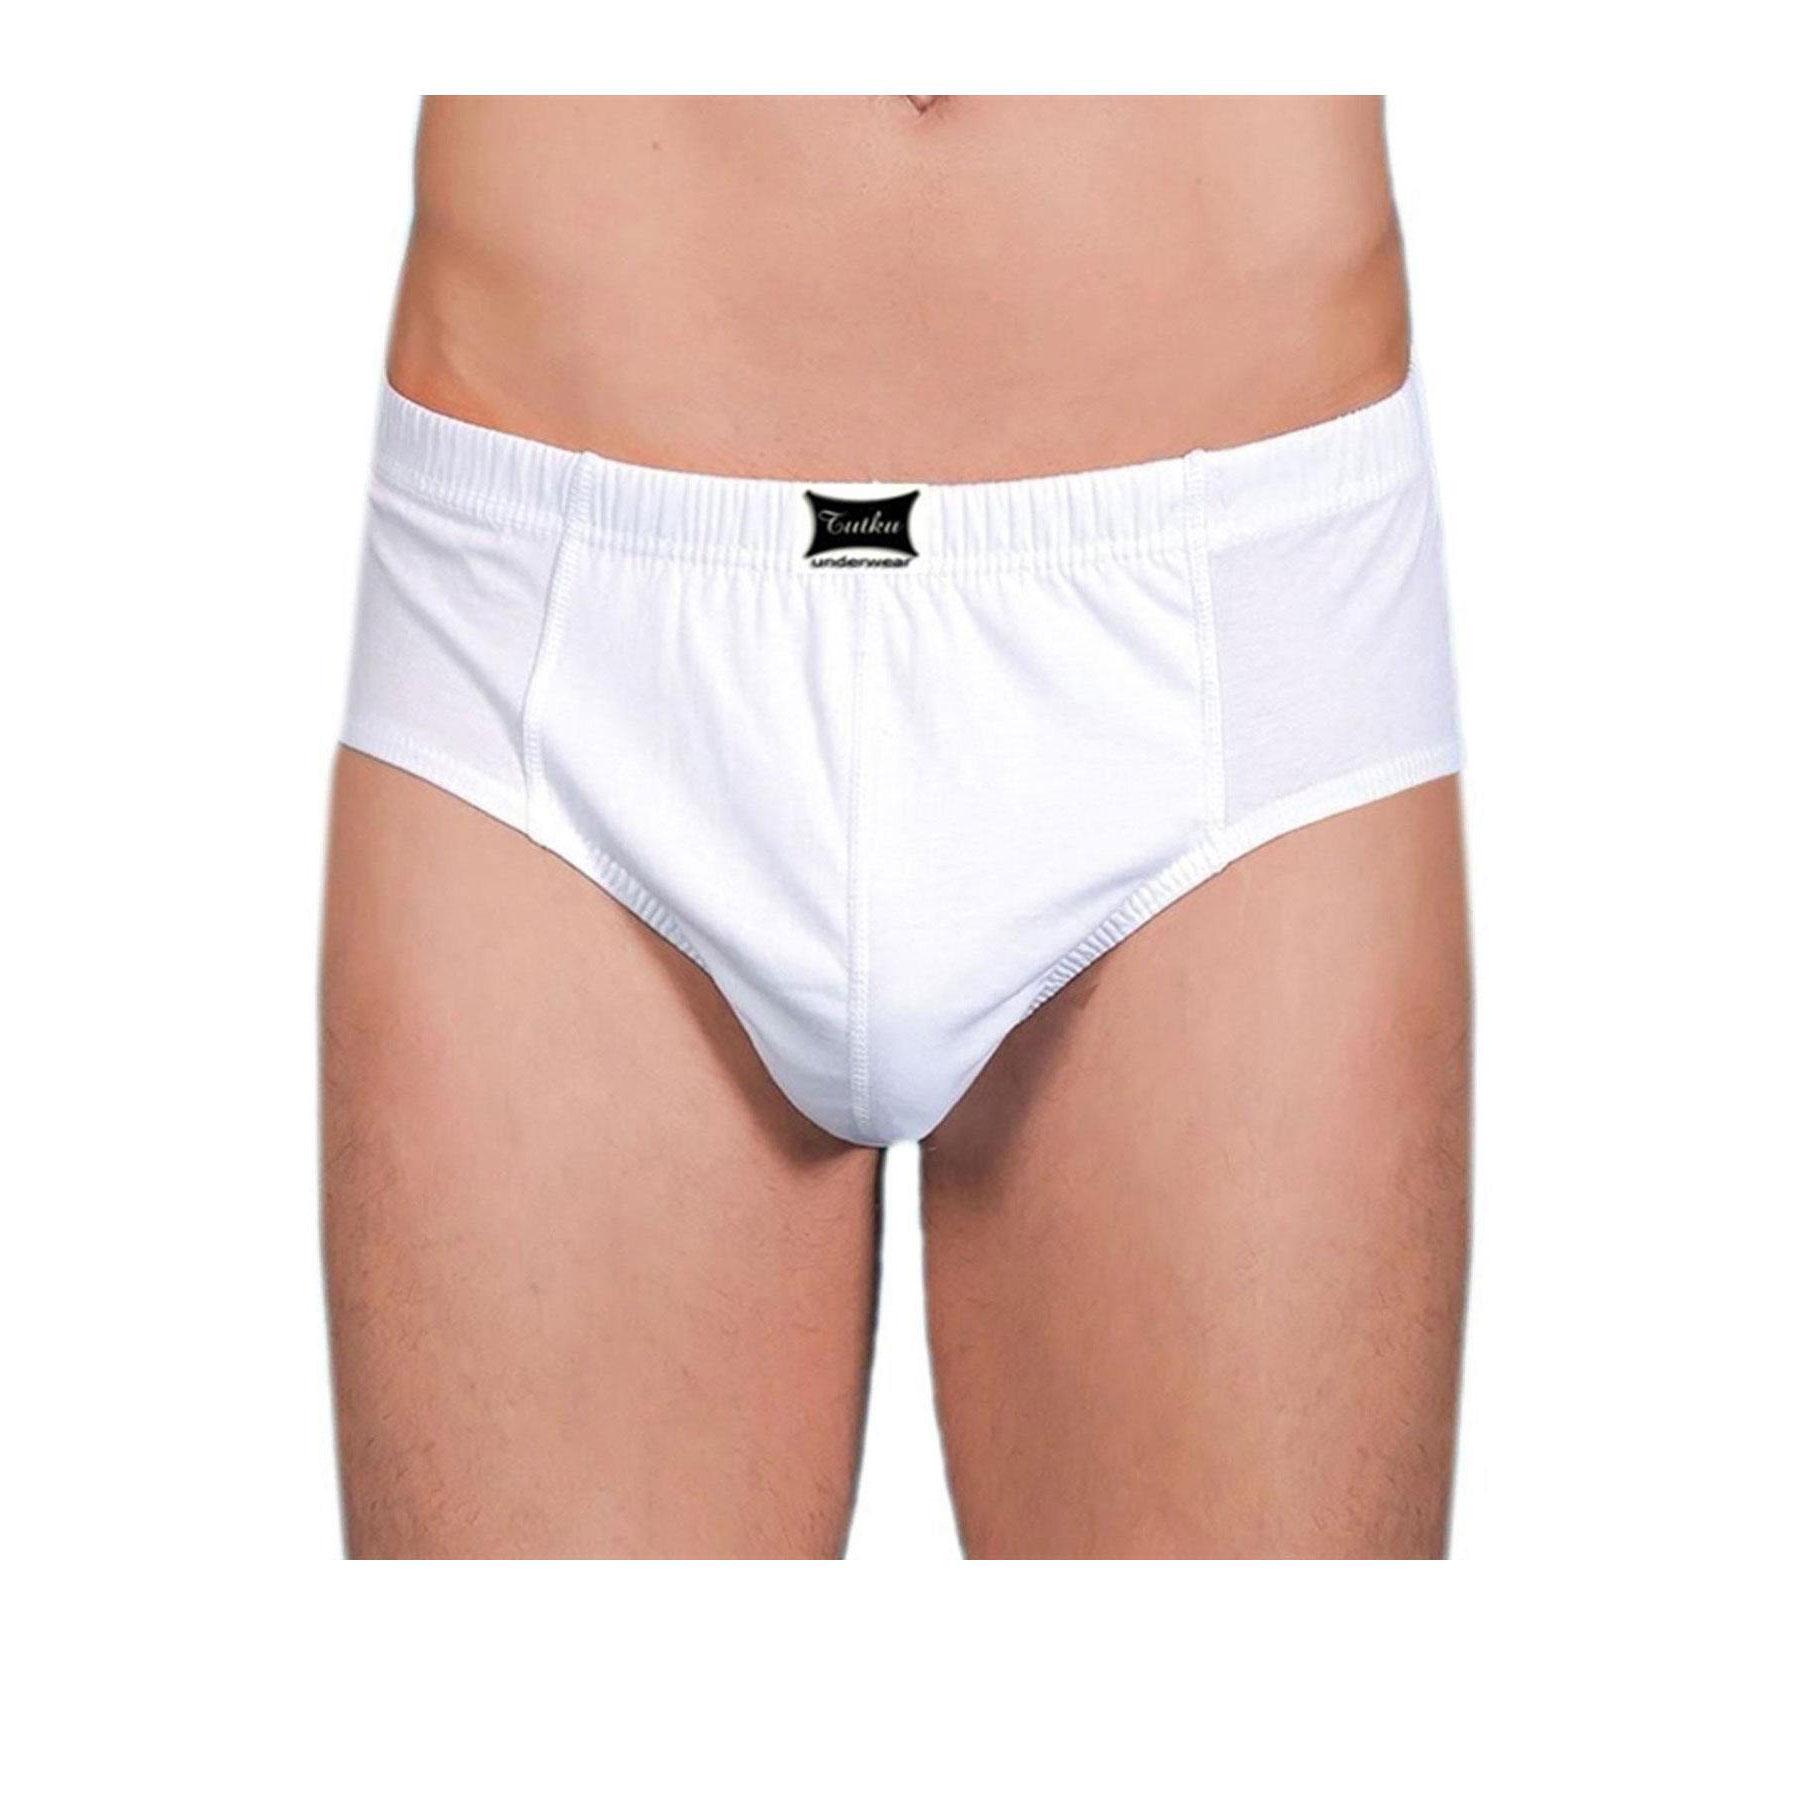 Hepsine Rakip Tutku Underwear Cotton Men's Slip Underpants 12 Pcs Pack